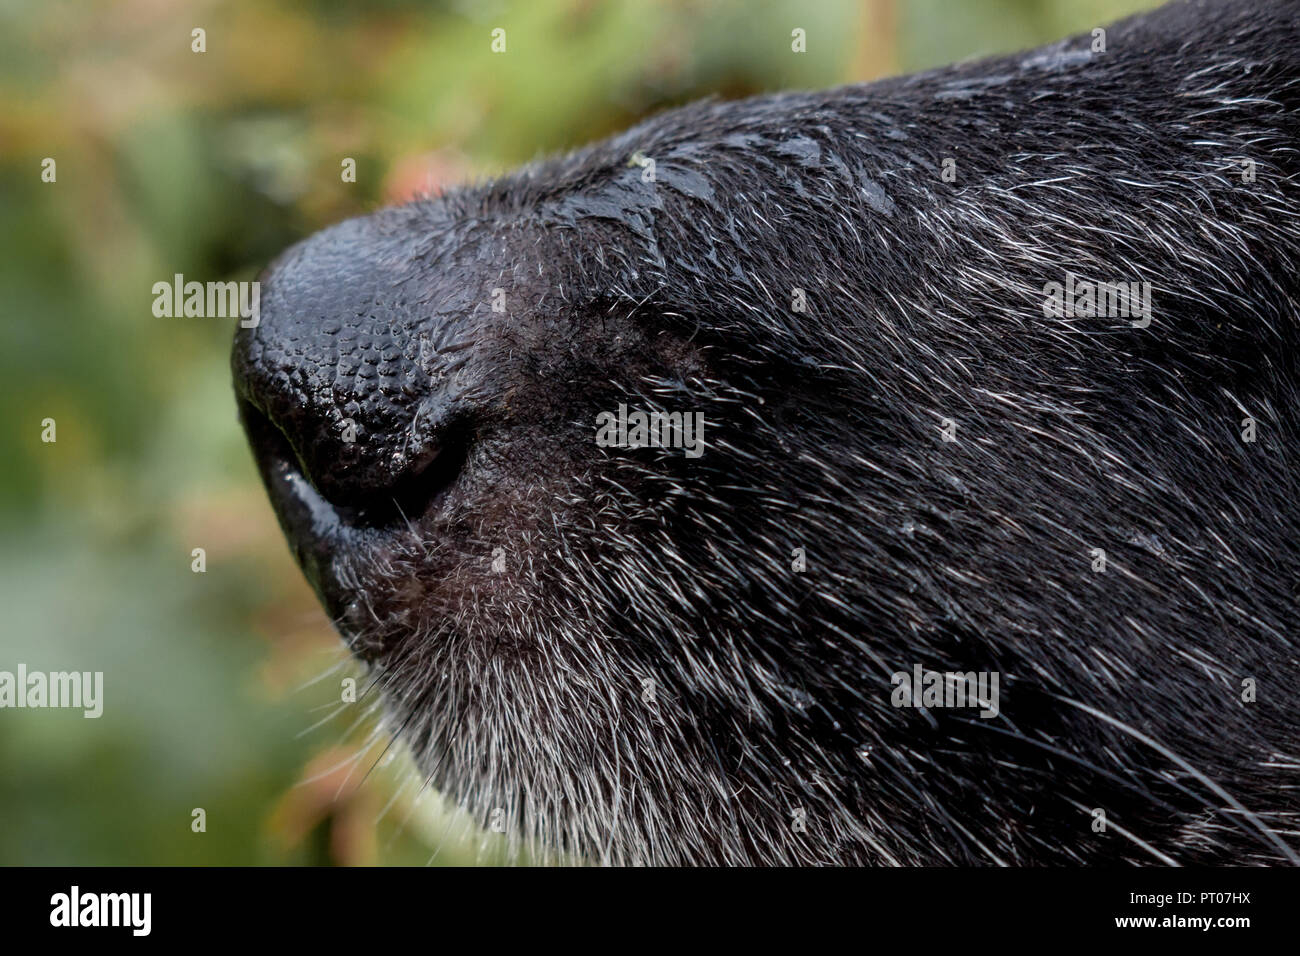 Macro shot of a dog nose Stock Photo